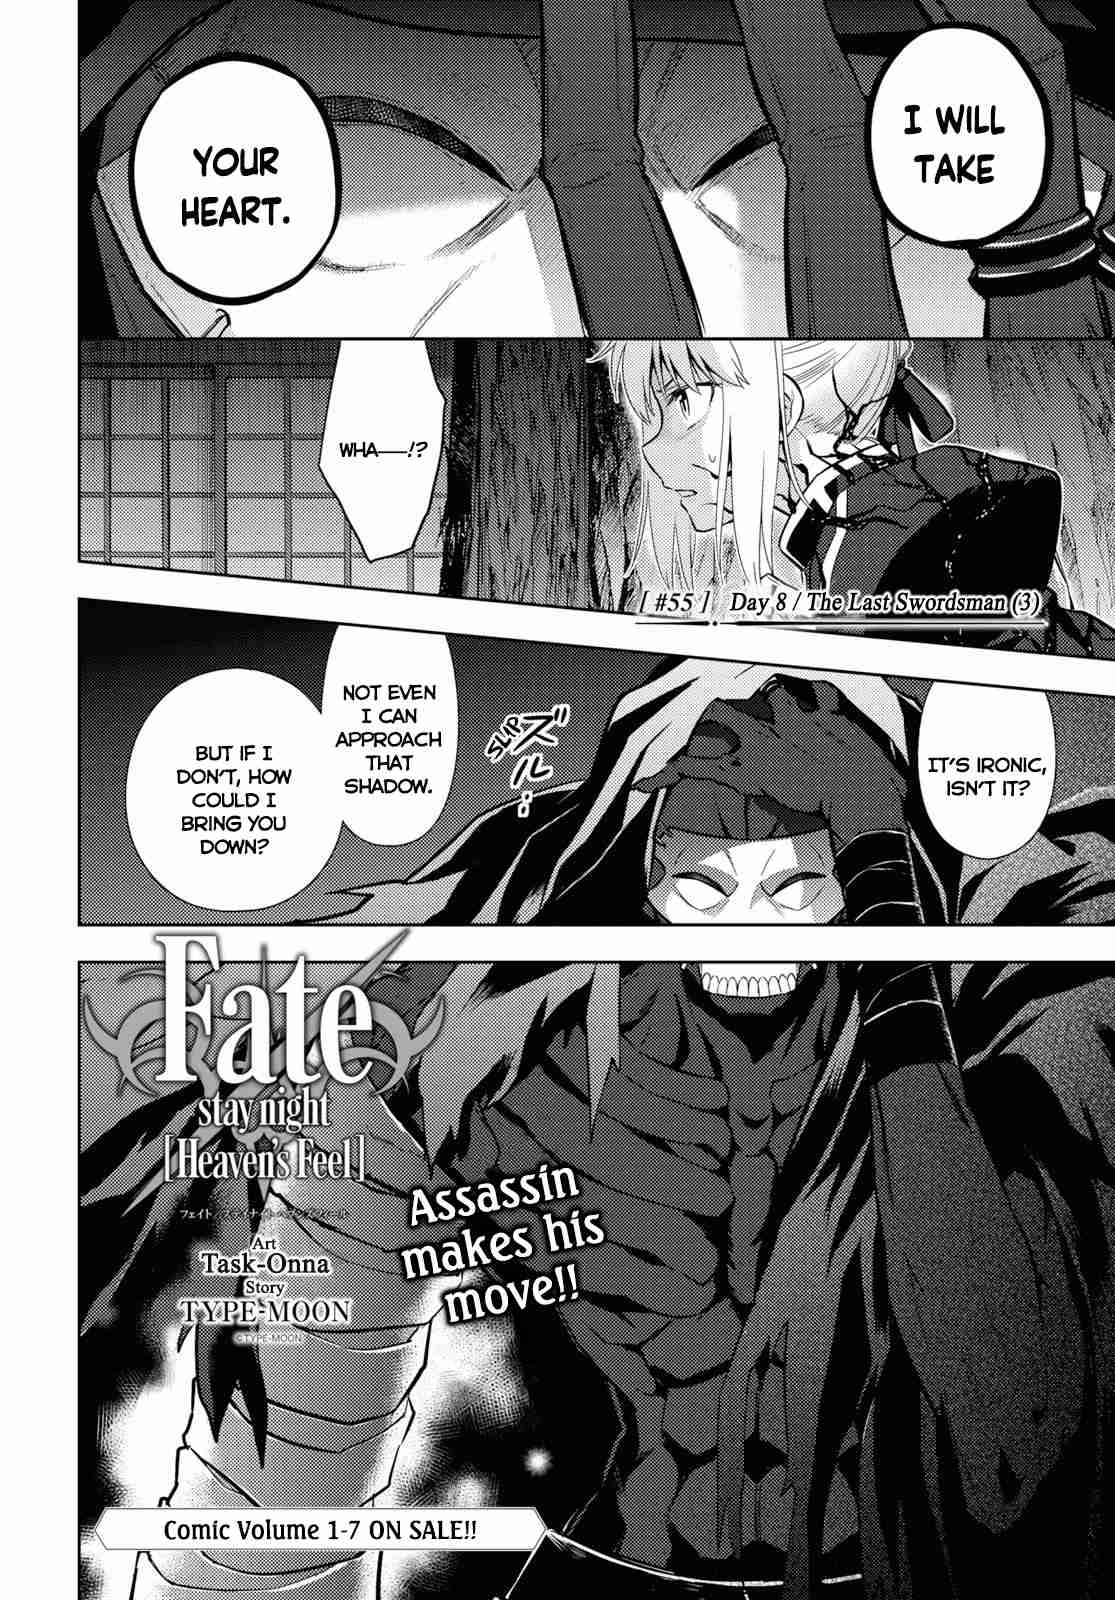 Fate/stay night: Heaven's Feel Vol. 8 Ch. 55 Day 8 / The Last Swordsman (3)